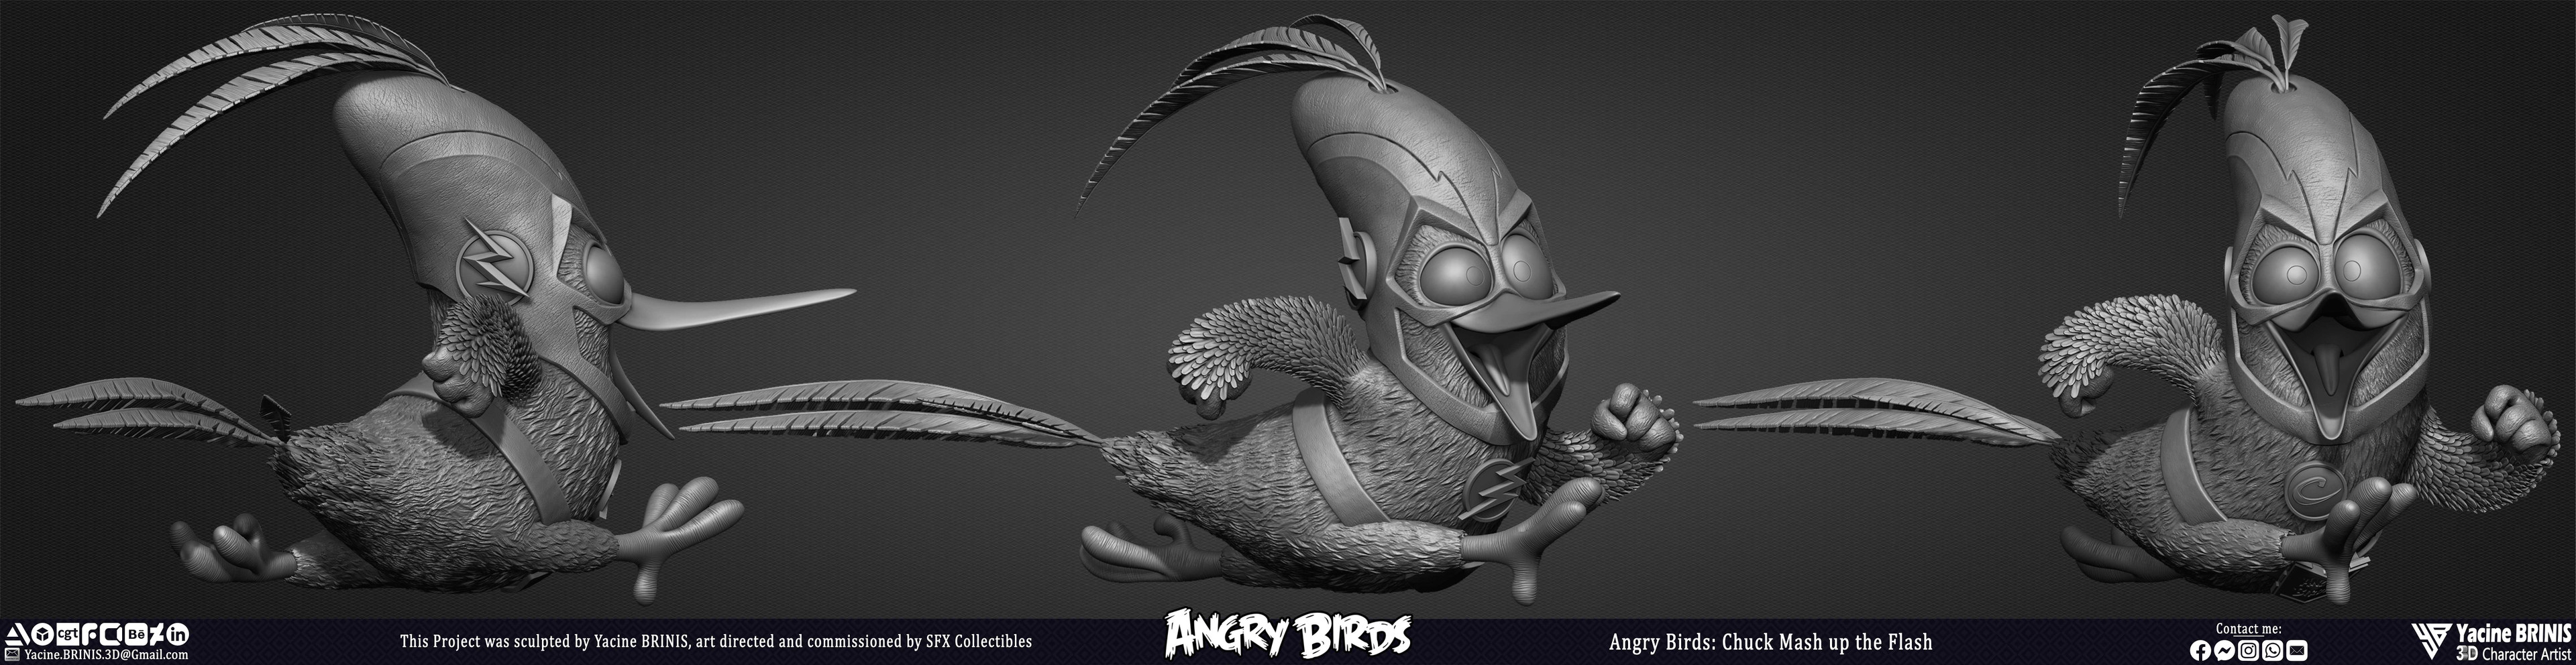 Chuck Running The Flash Angry Birds Movie 02 Rovio sculpted by Yacine BRINIS 002